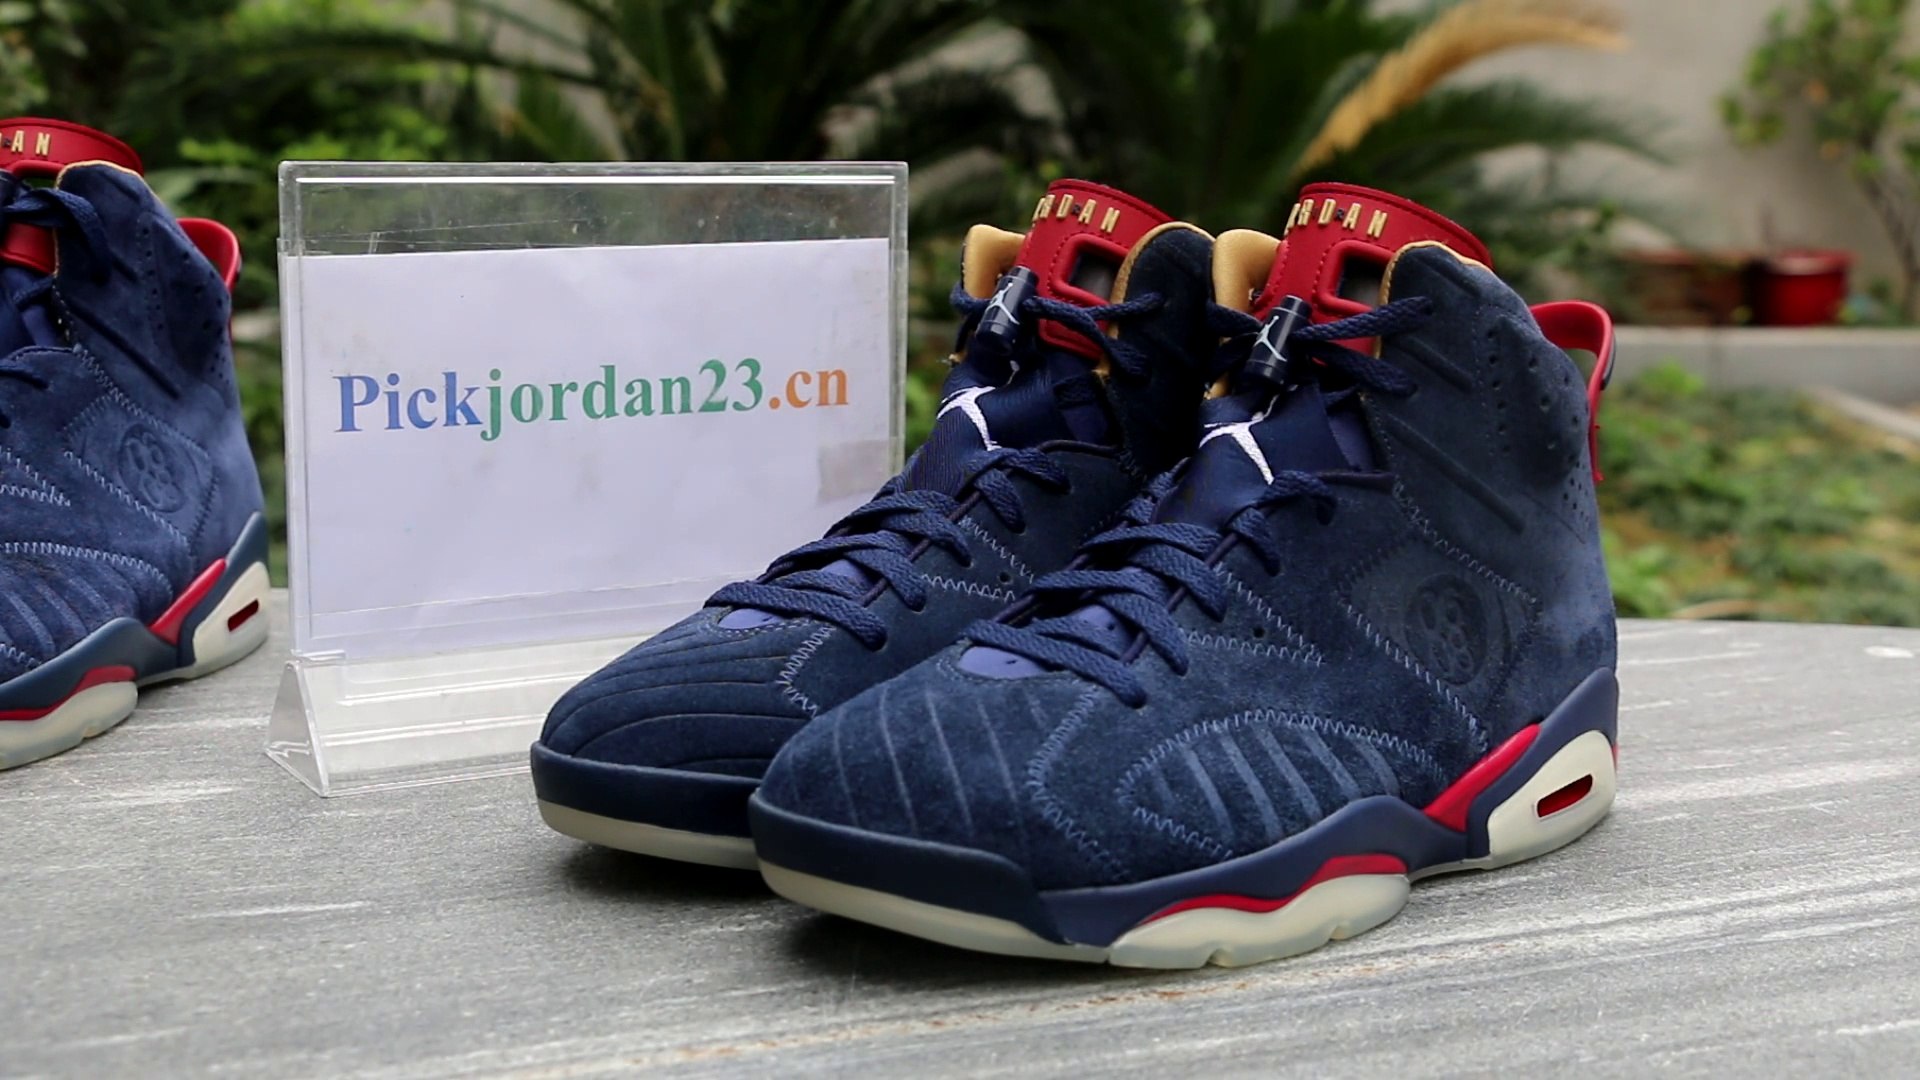 Air Jordan 6 Doernbecher Shoes Review From PickJordan23.cn─影片Dailymotion